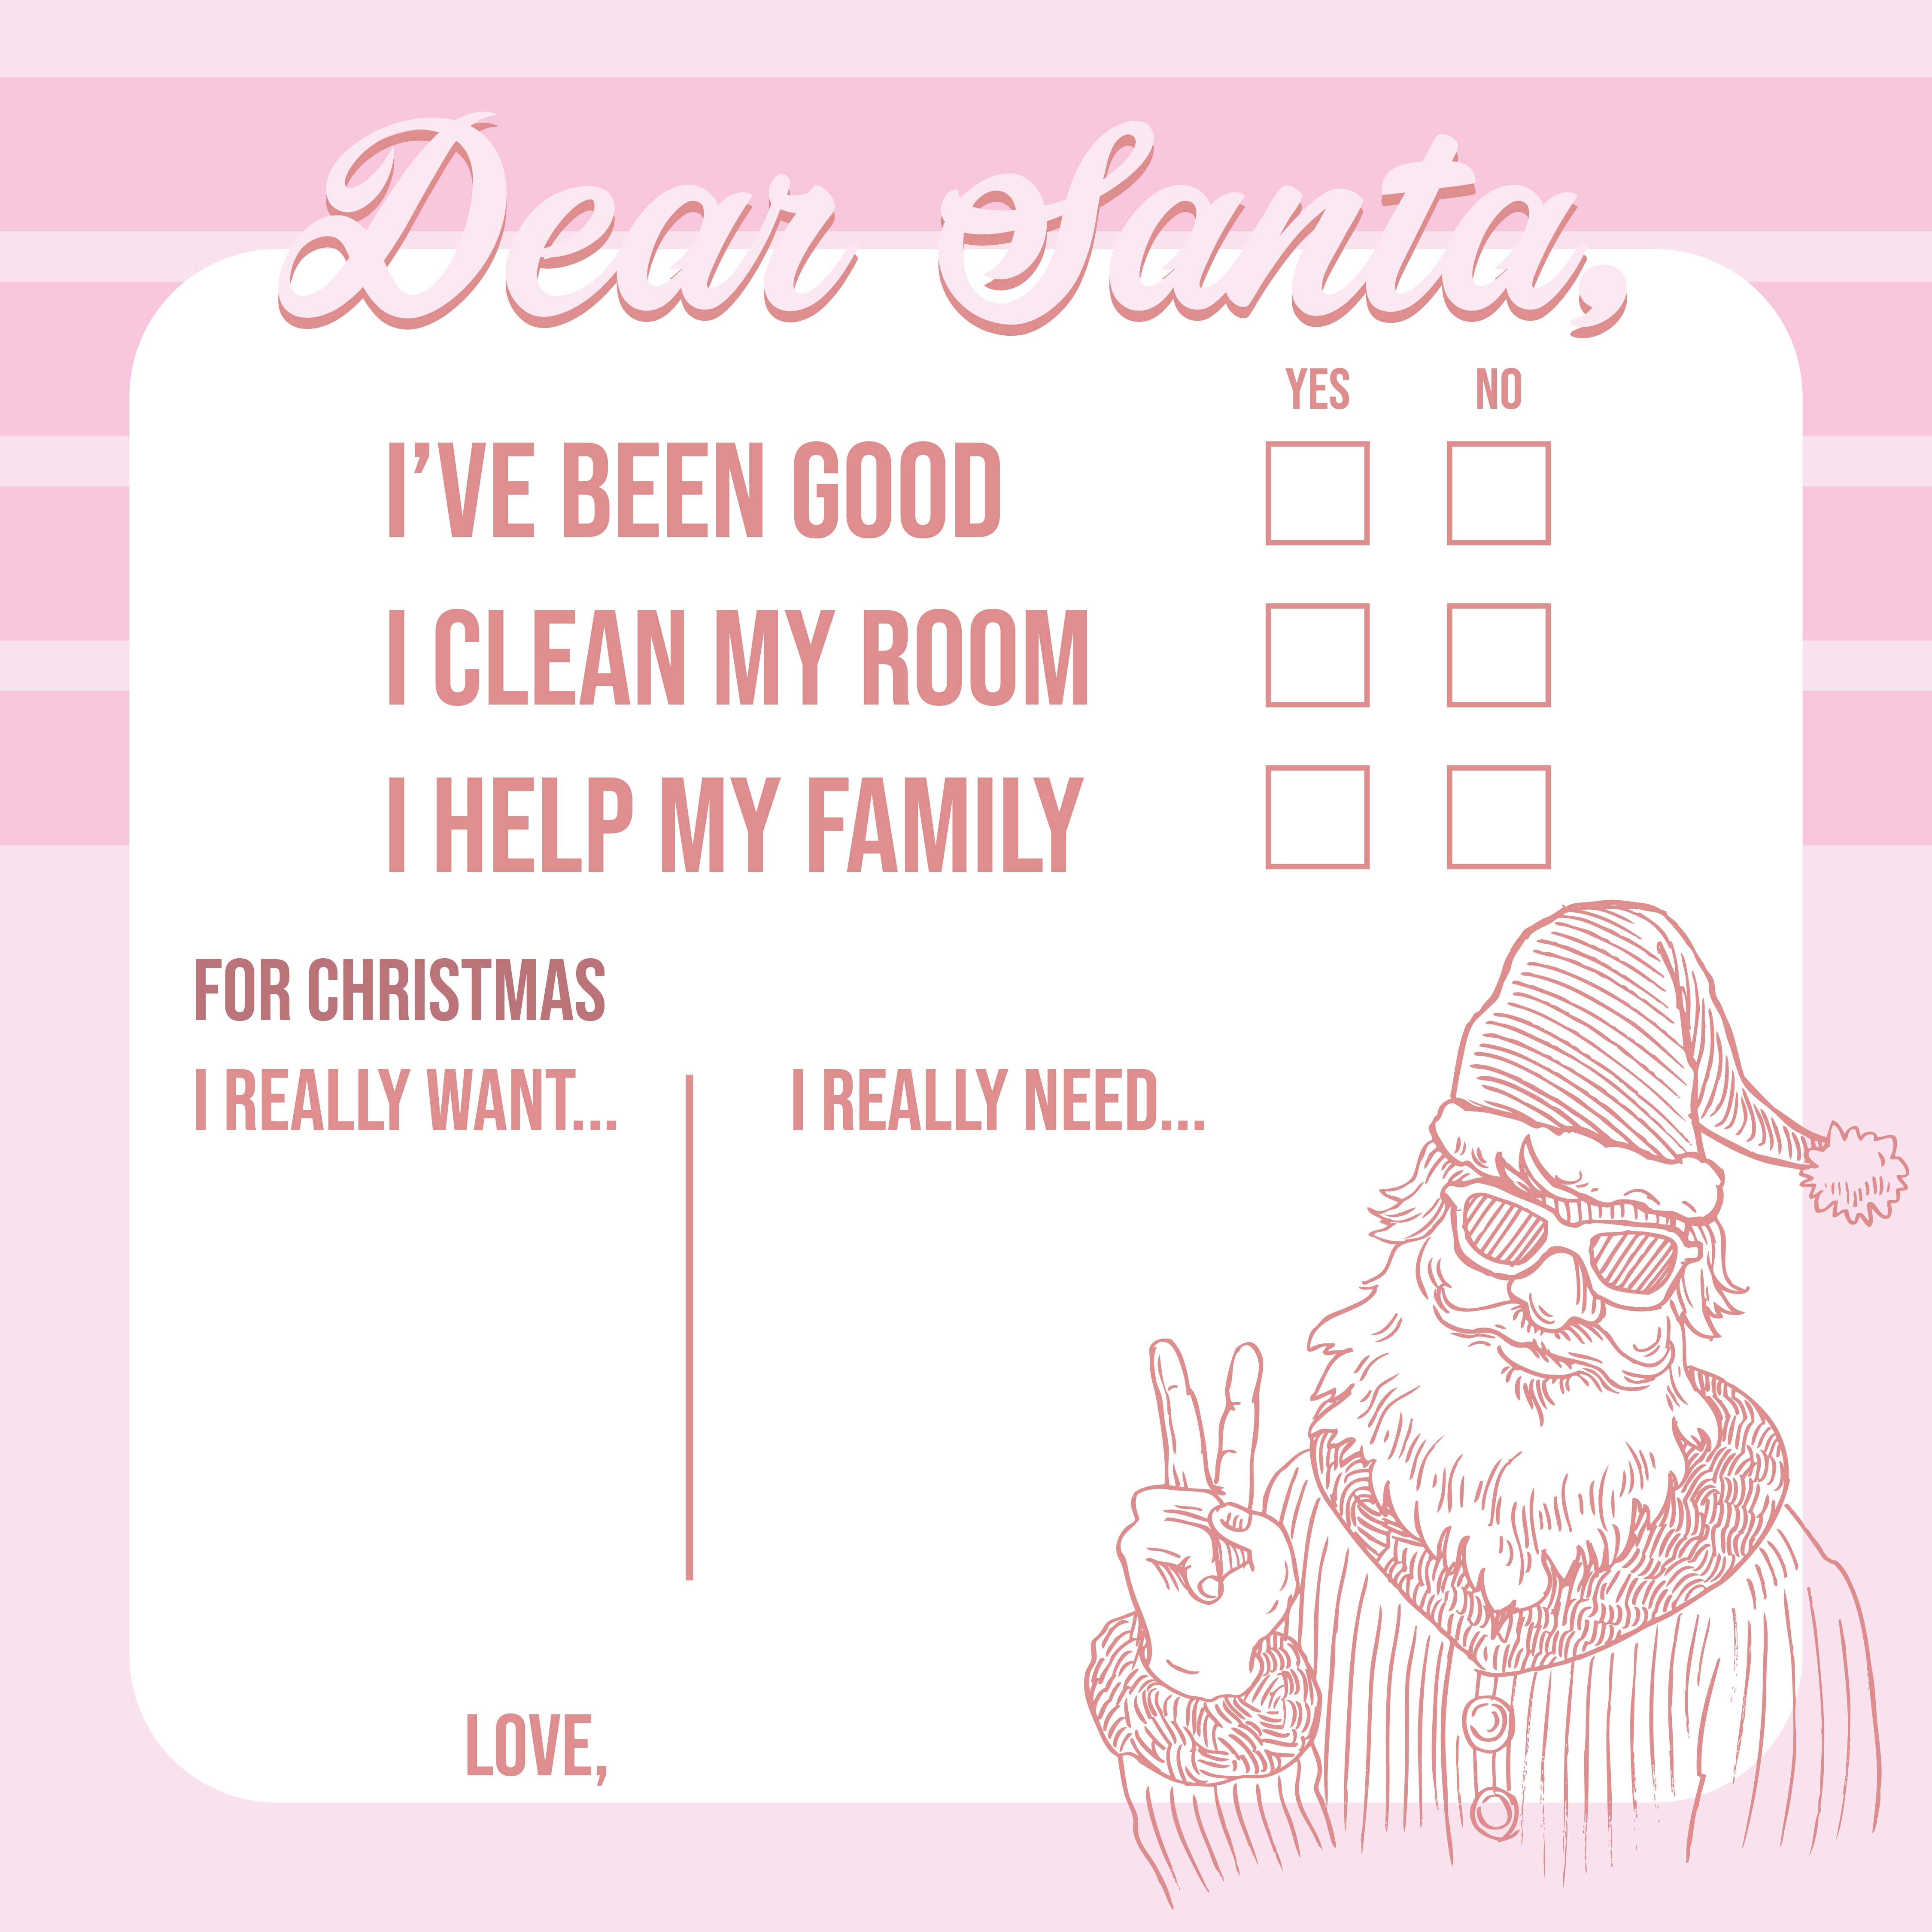 Printable Dear Santa Letter Template